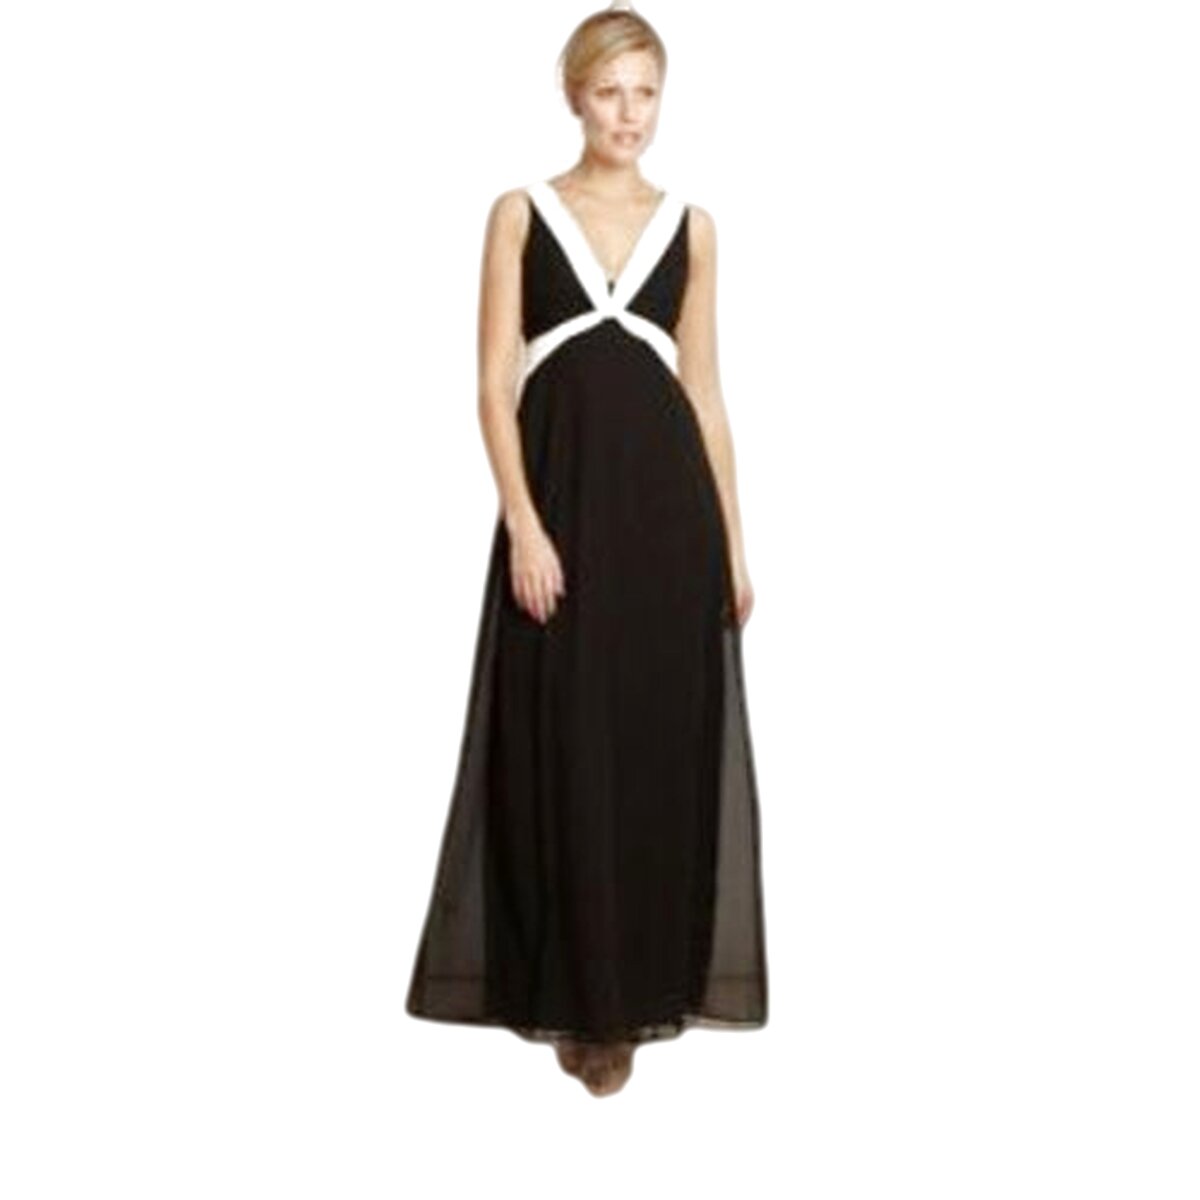 Debenhams Black White Dress for sale in 